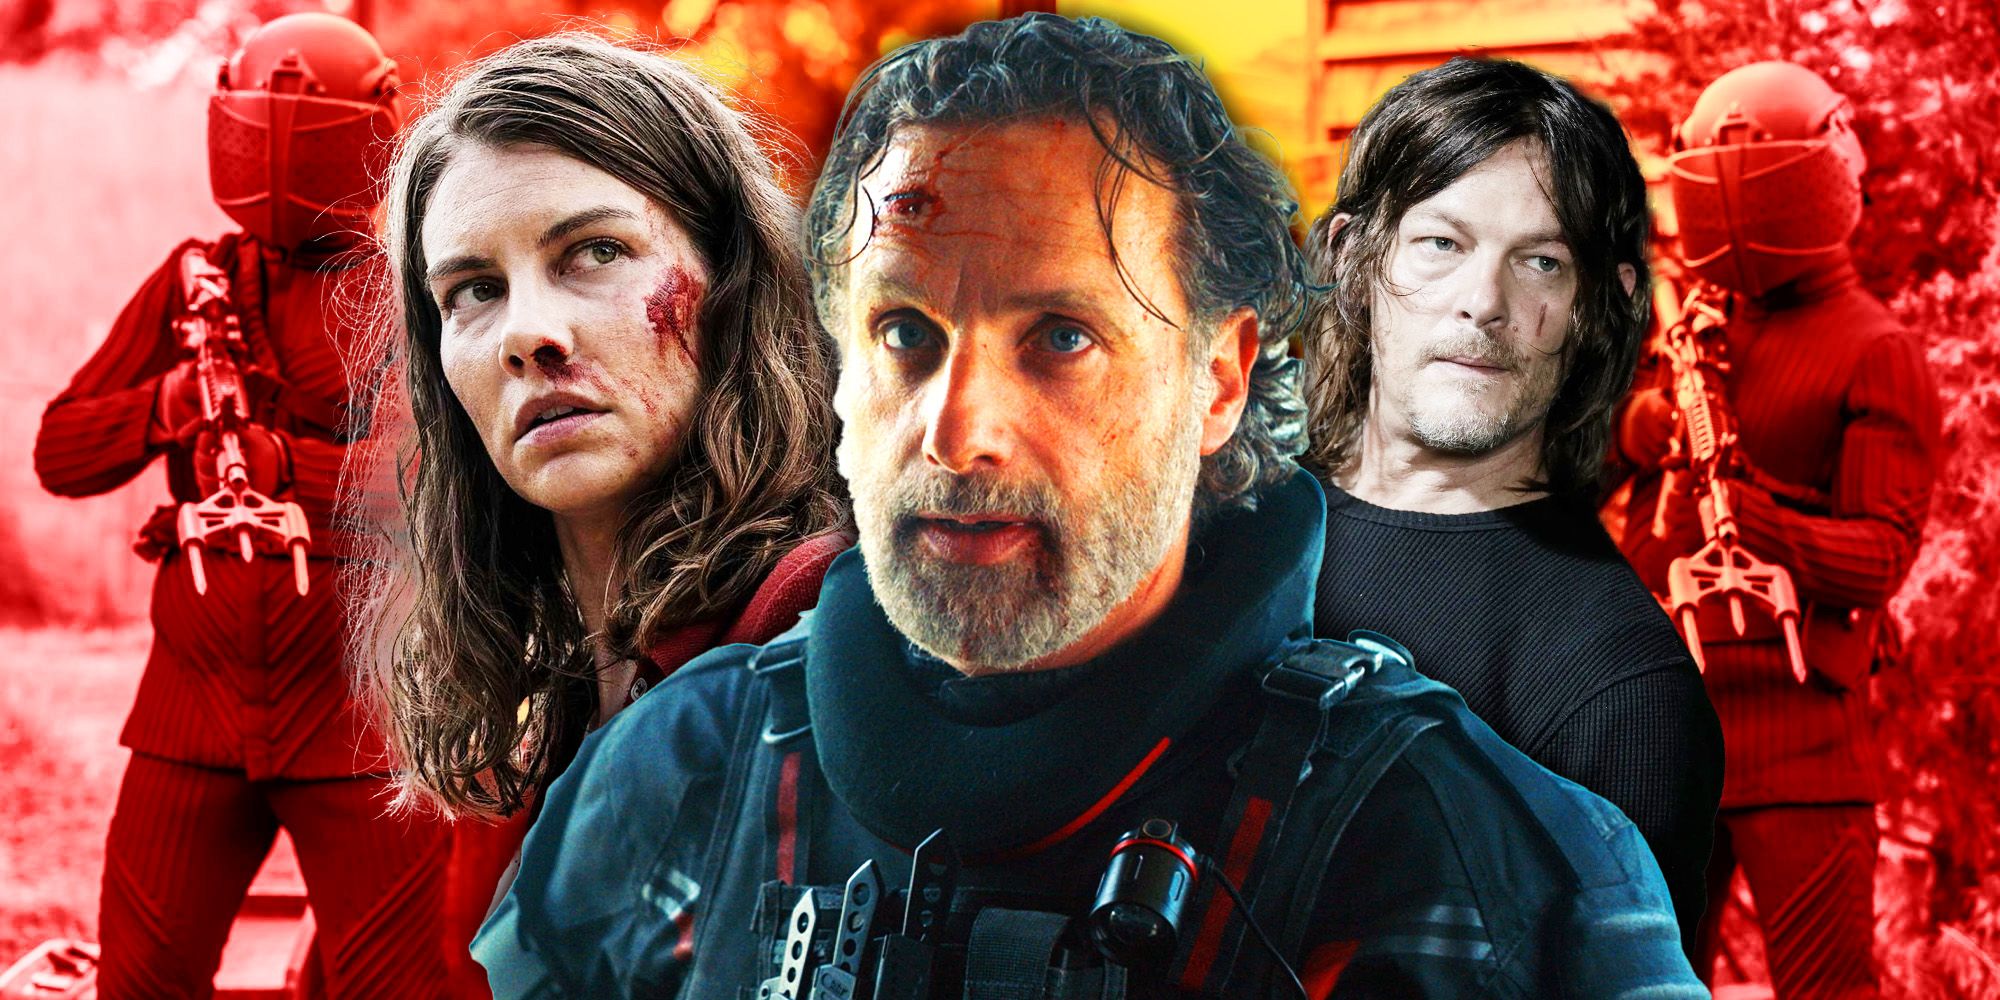 Lauren Cohan como Maggie Rhee, Andrew Lincoln como Rick Grimes e Norman Reedus como Daryl Dixon com soldados CRM atrás deles em The Walking Dead